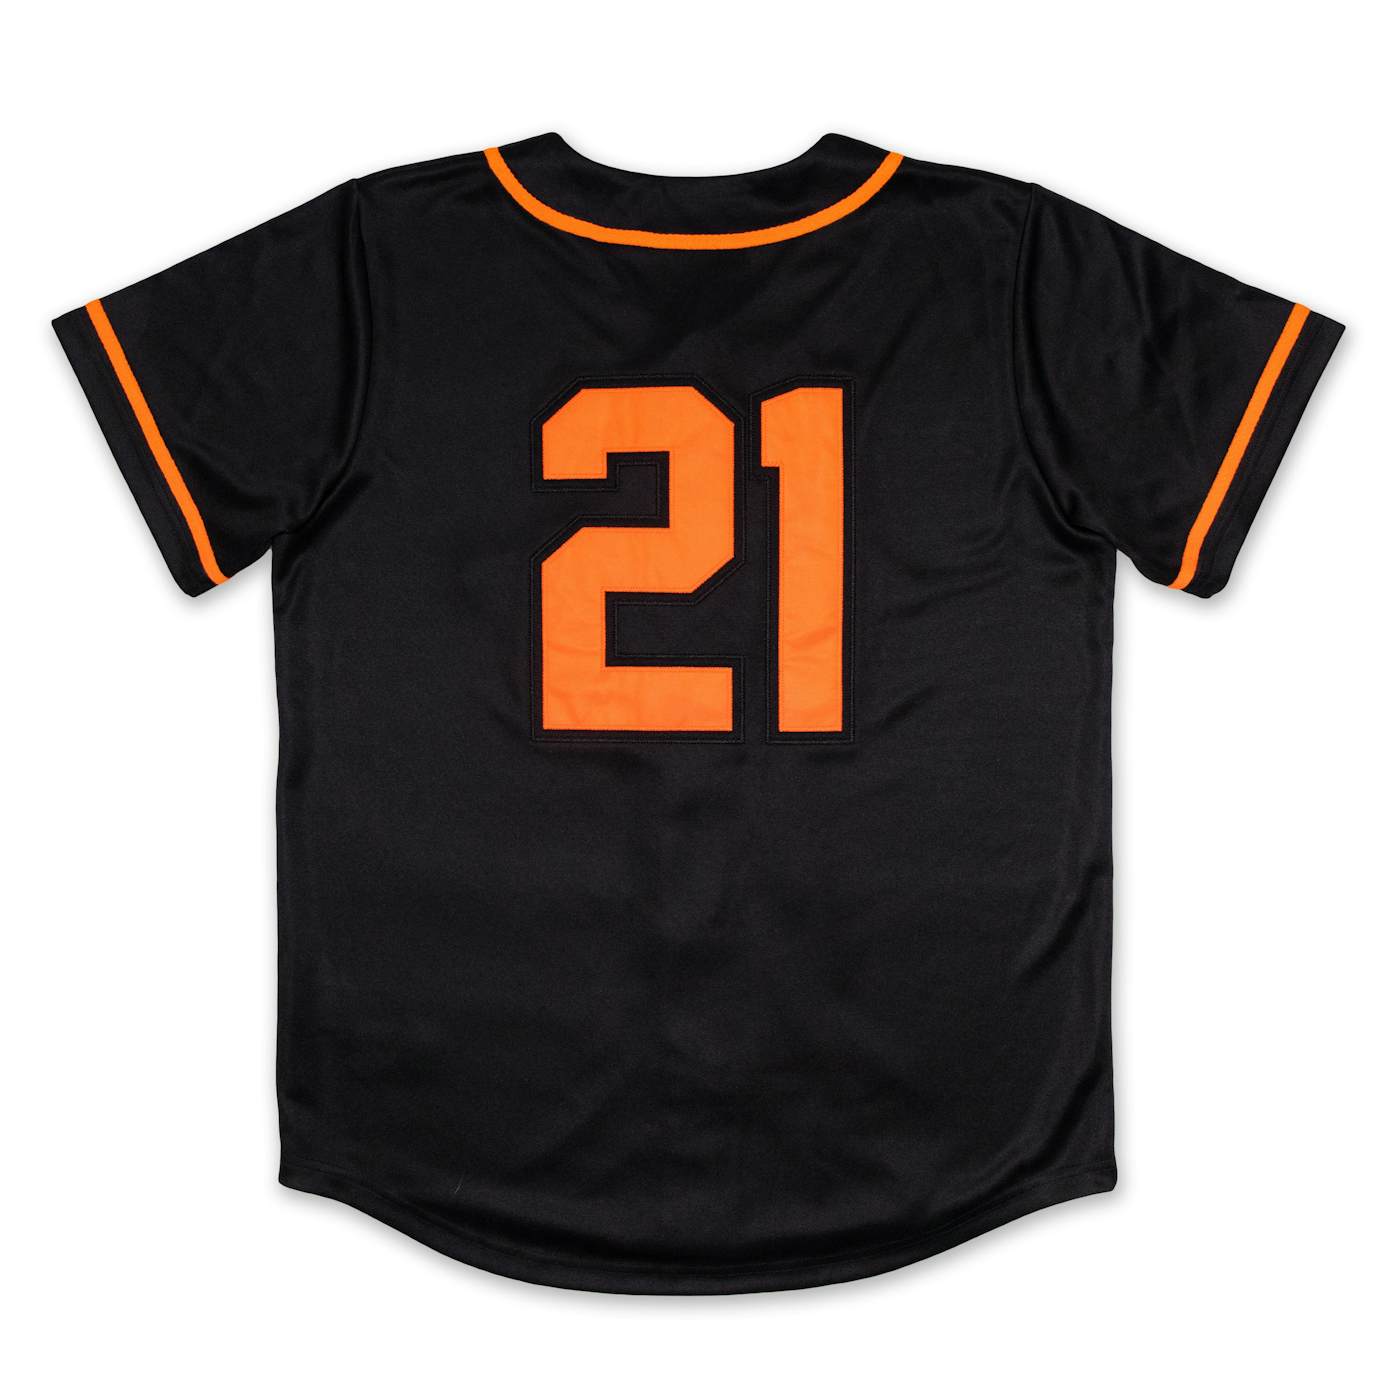 Kaskade Signature Baseball Jersey - Black/Orange